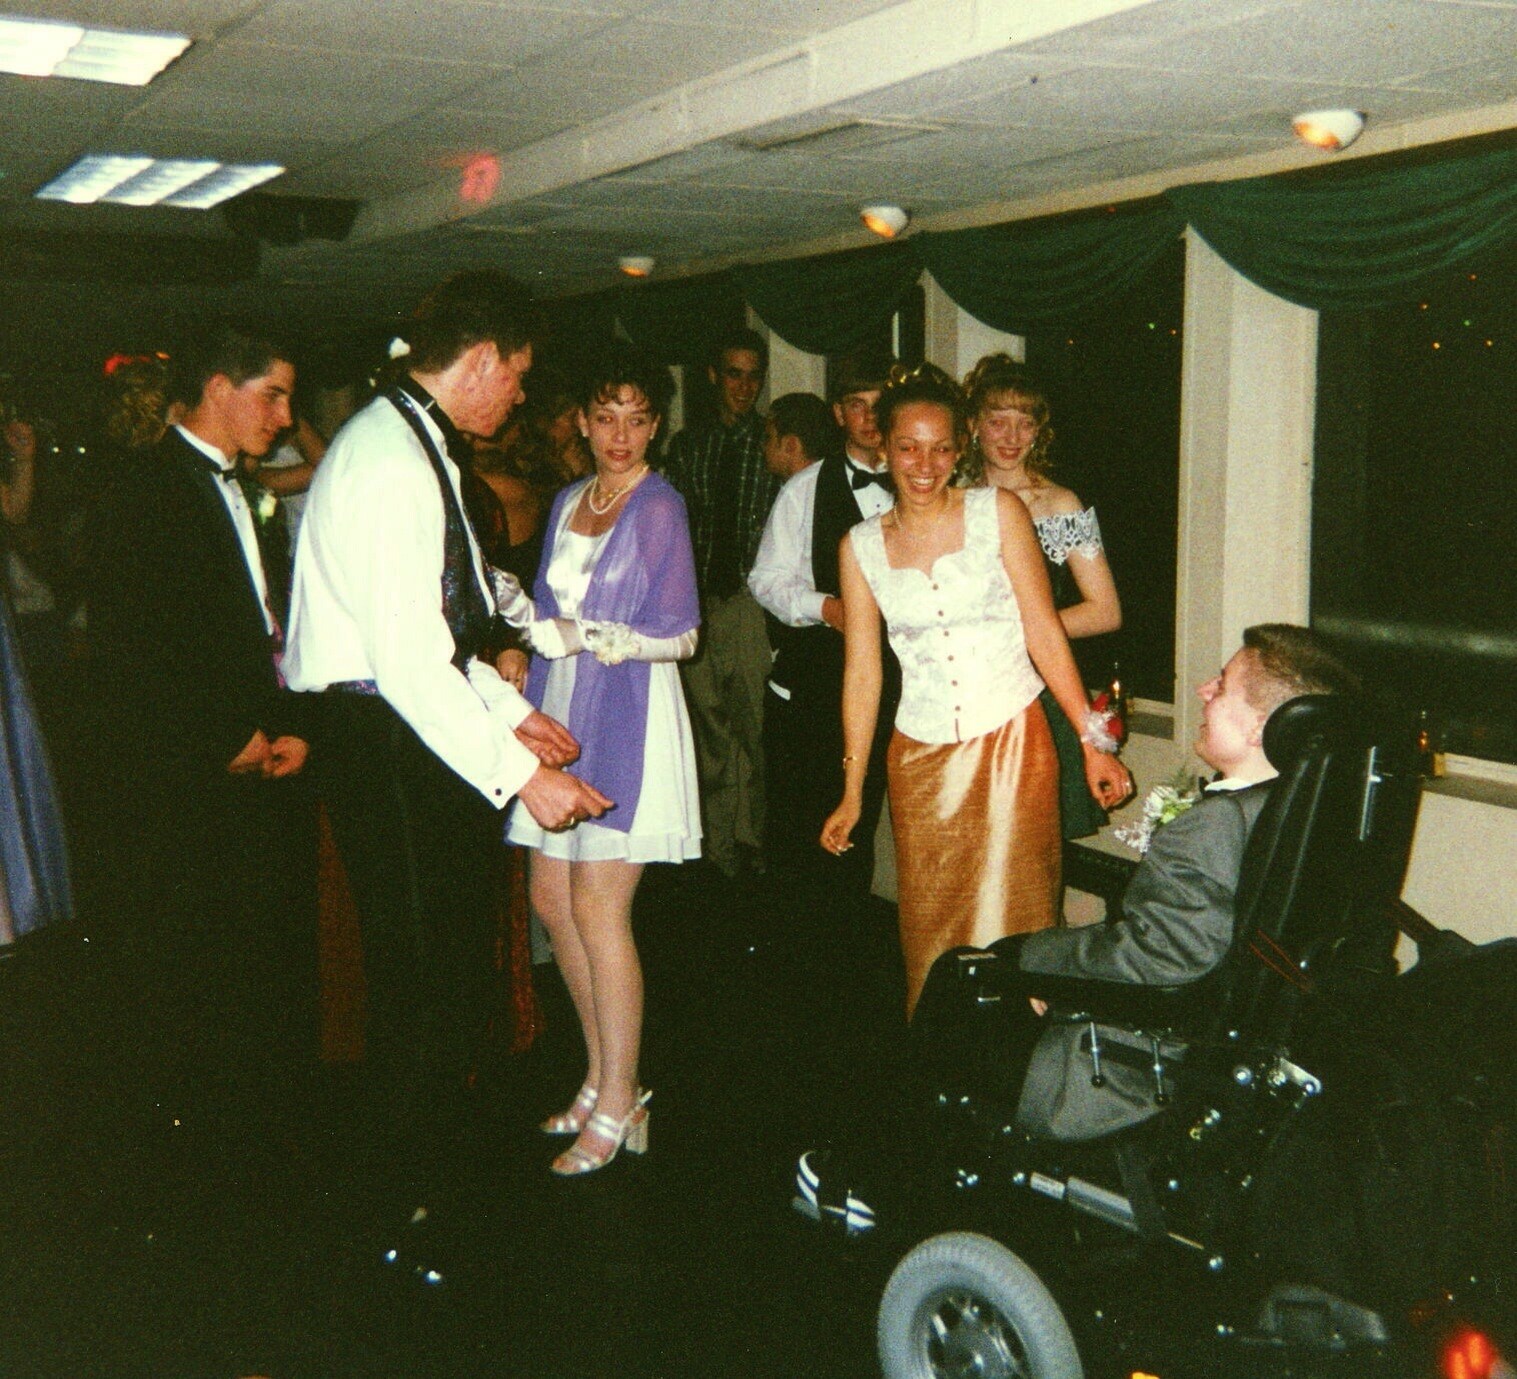 Ben on the dance floor with Angela, prom night, 1996.